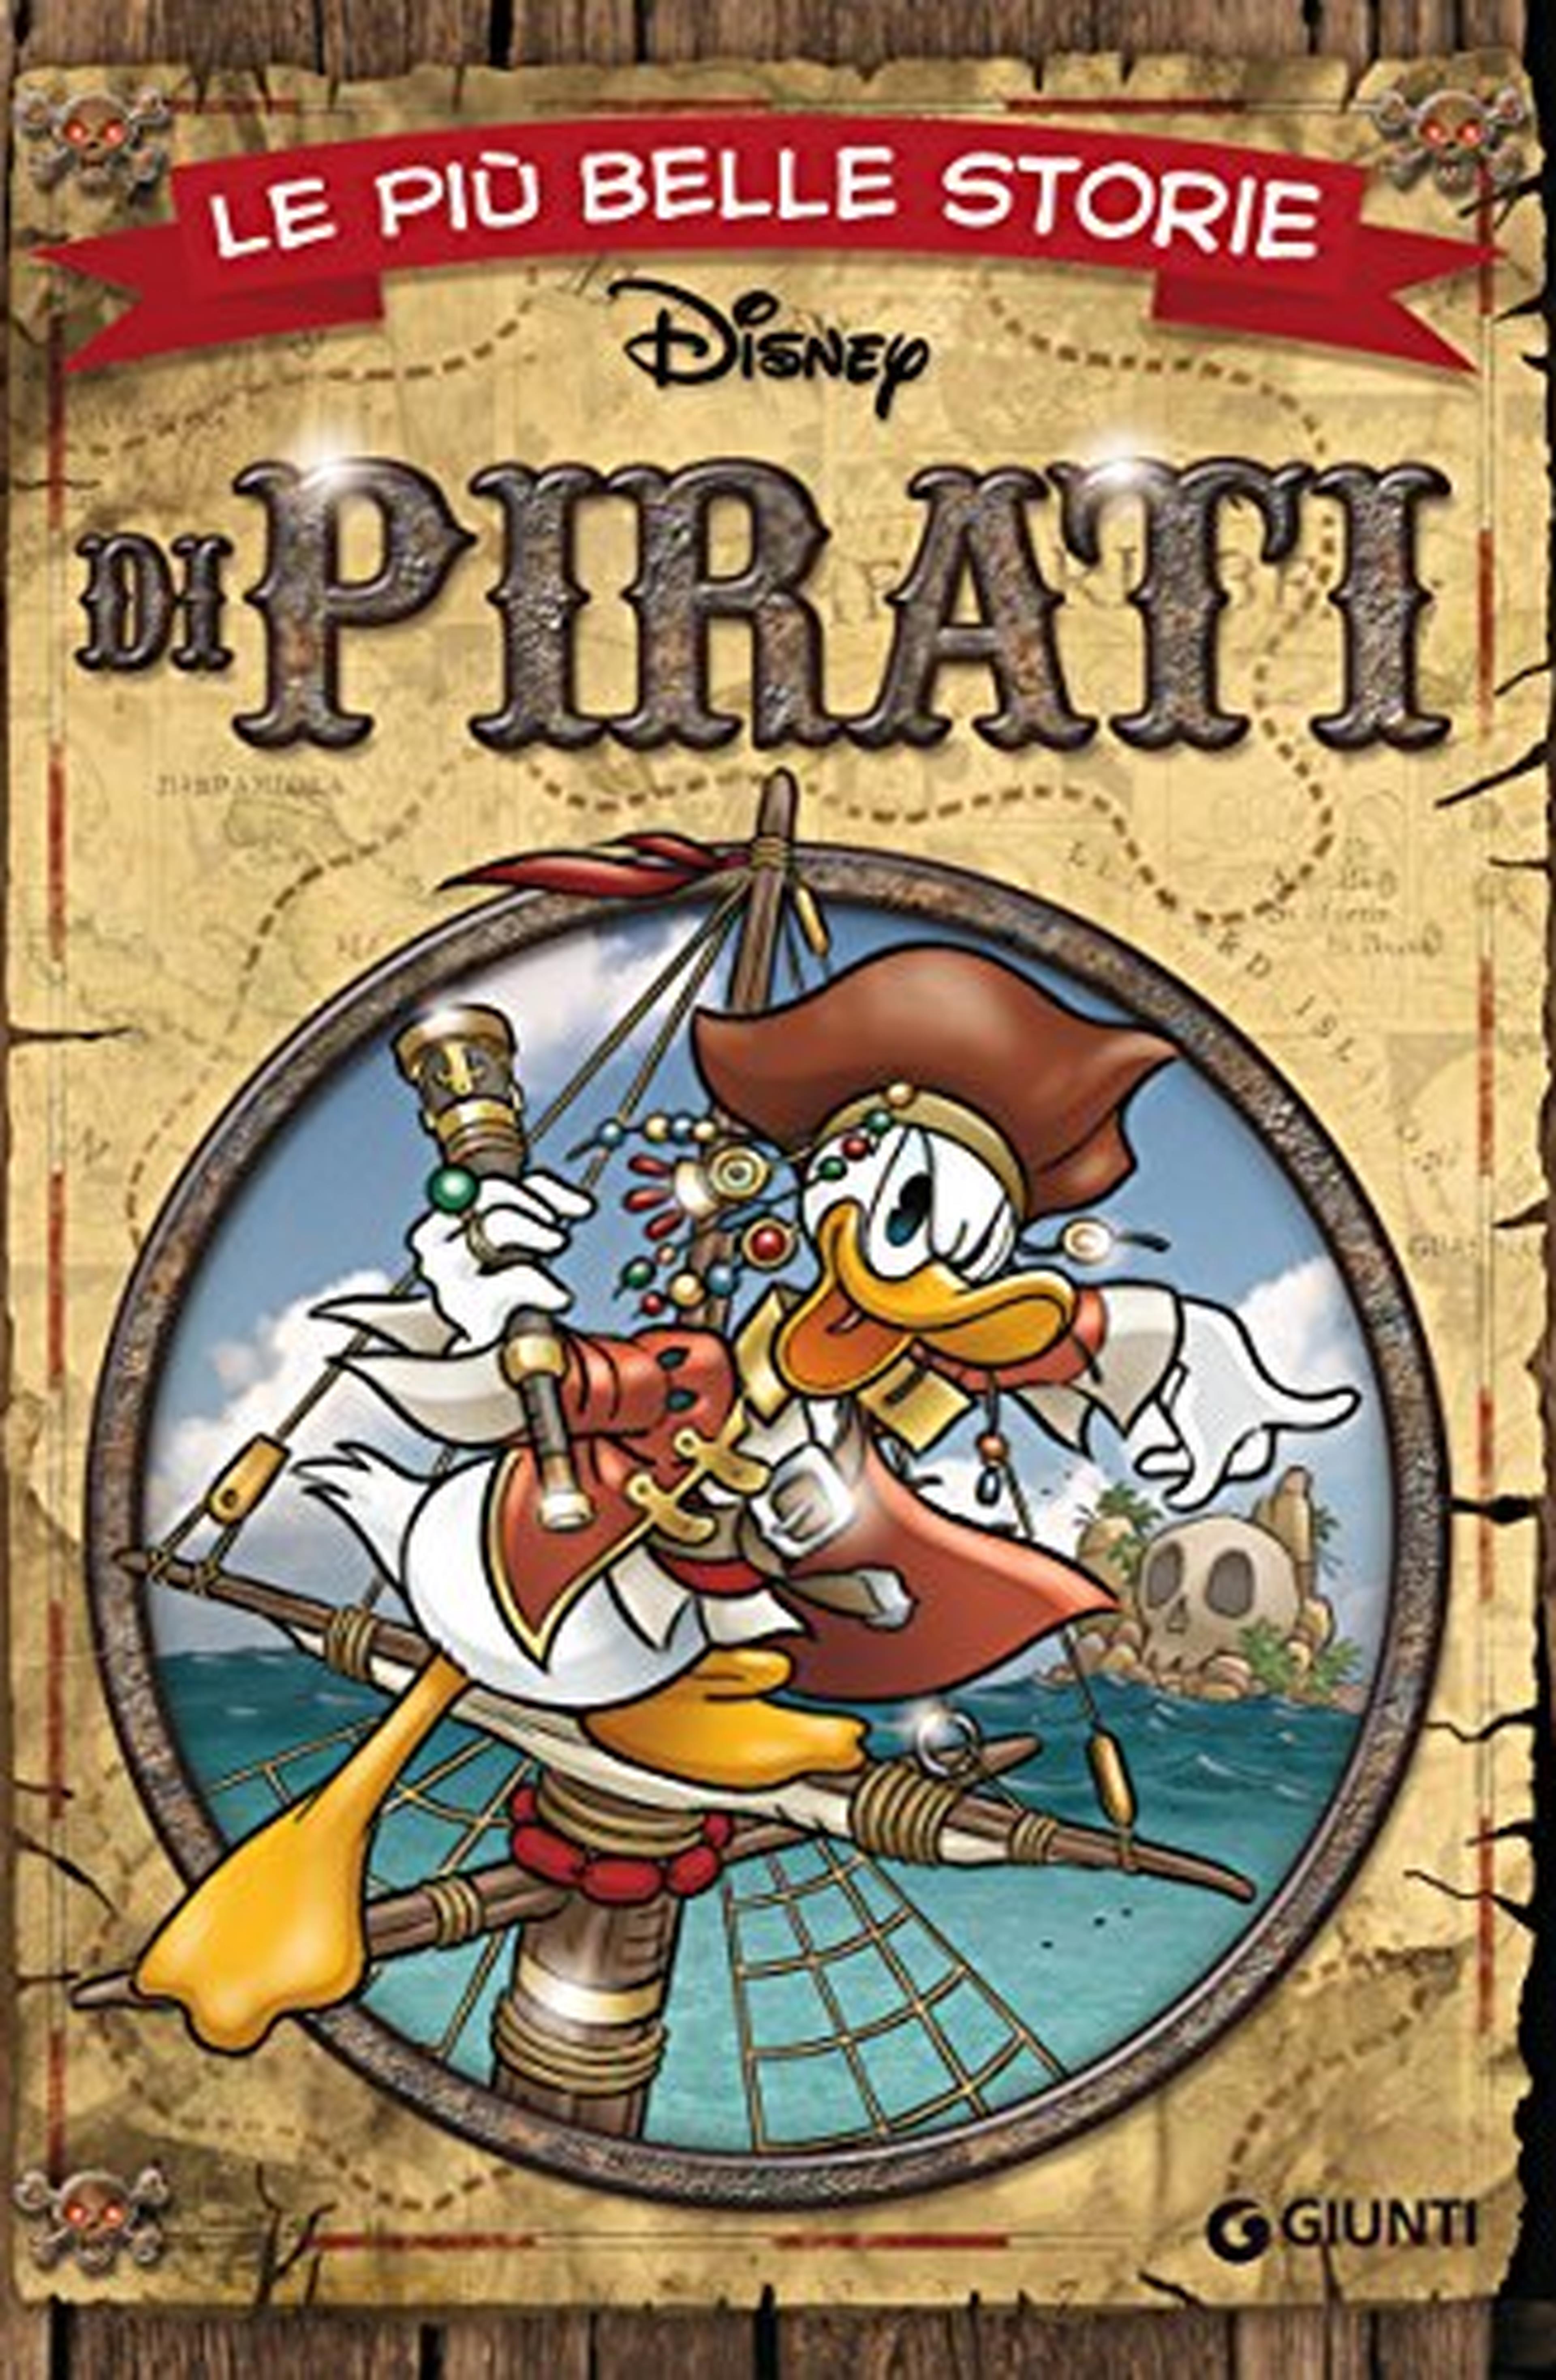 Le più belle storie di pirati (Storie a fumetti Vol. 32)